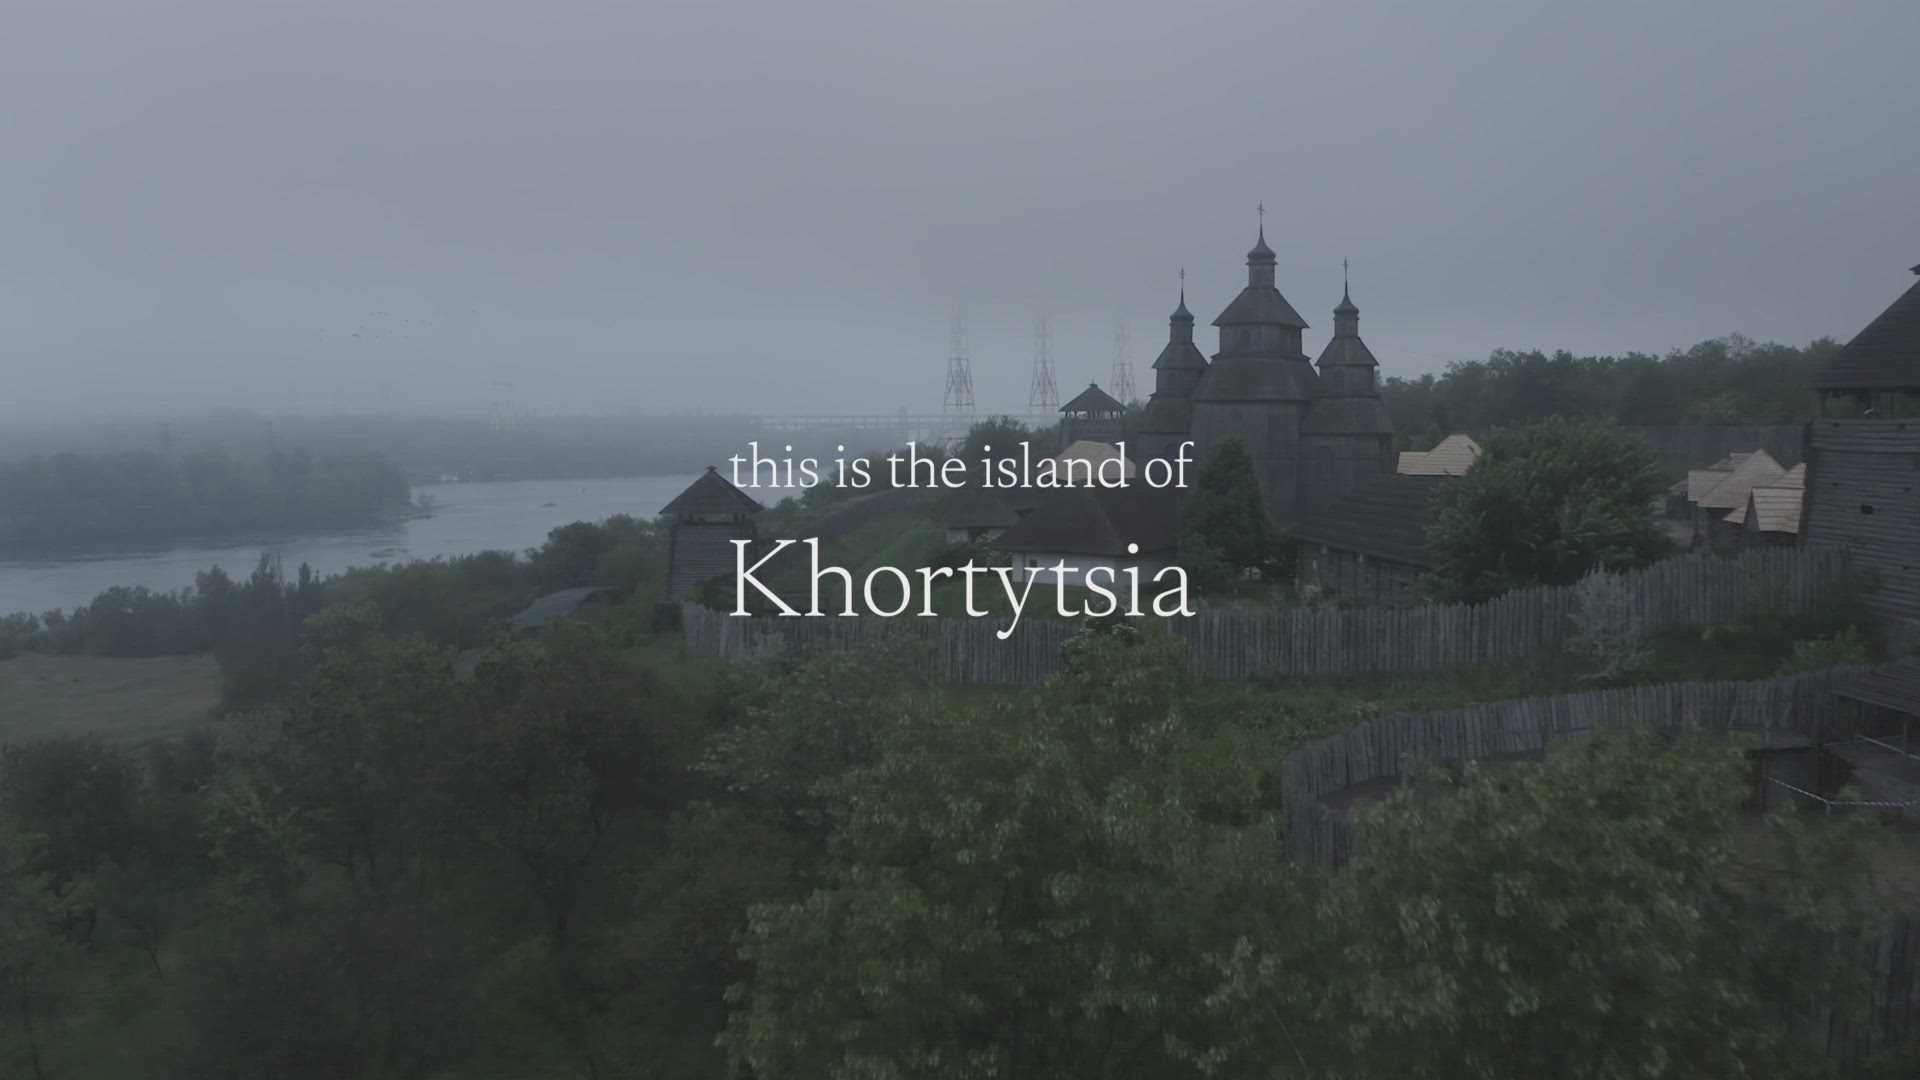 Khortytsia - the island of a mystery